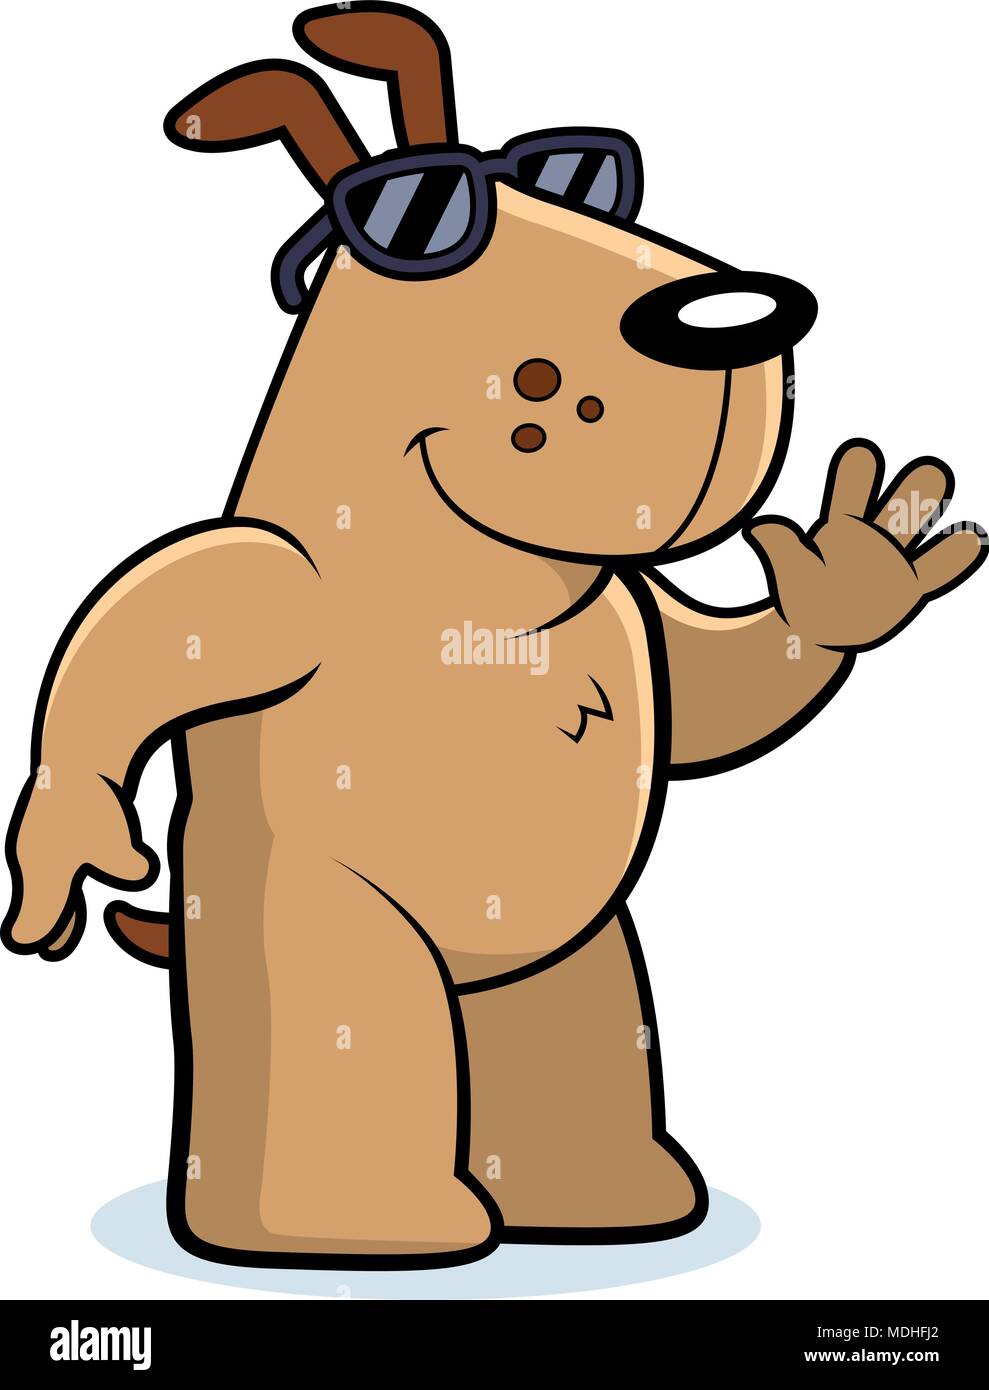 A cartoon illustration of a dog wearing sunglasses Stock Vector Image & Art  - Alamy